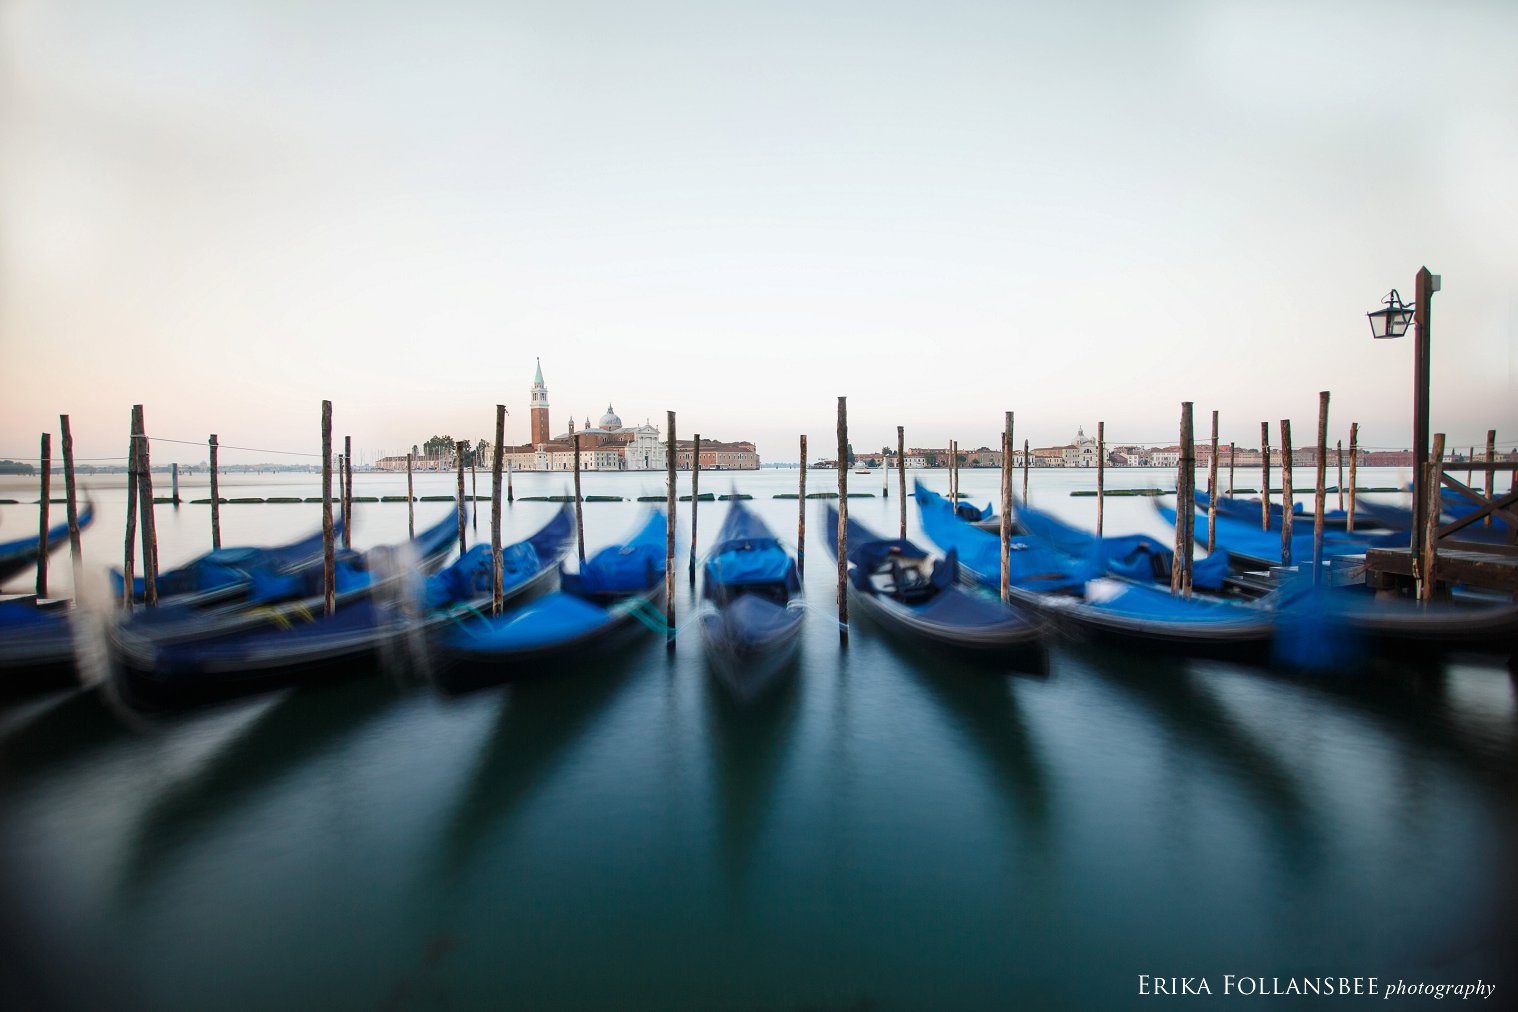 Gondolas in Venice in the early morning